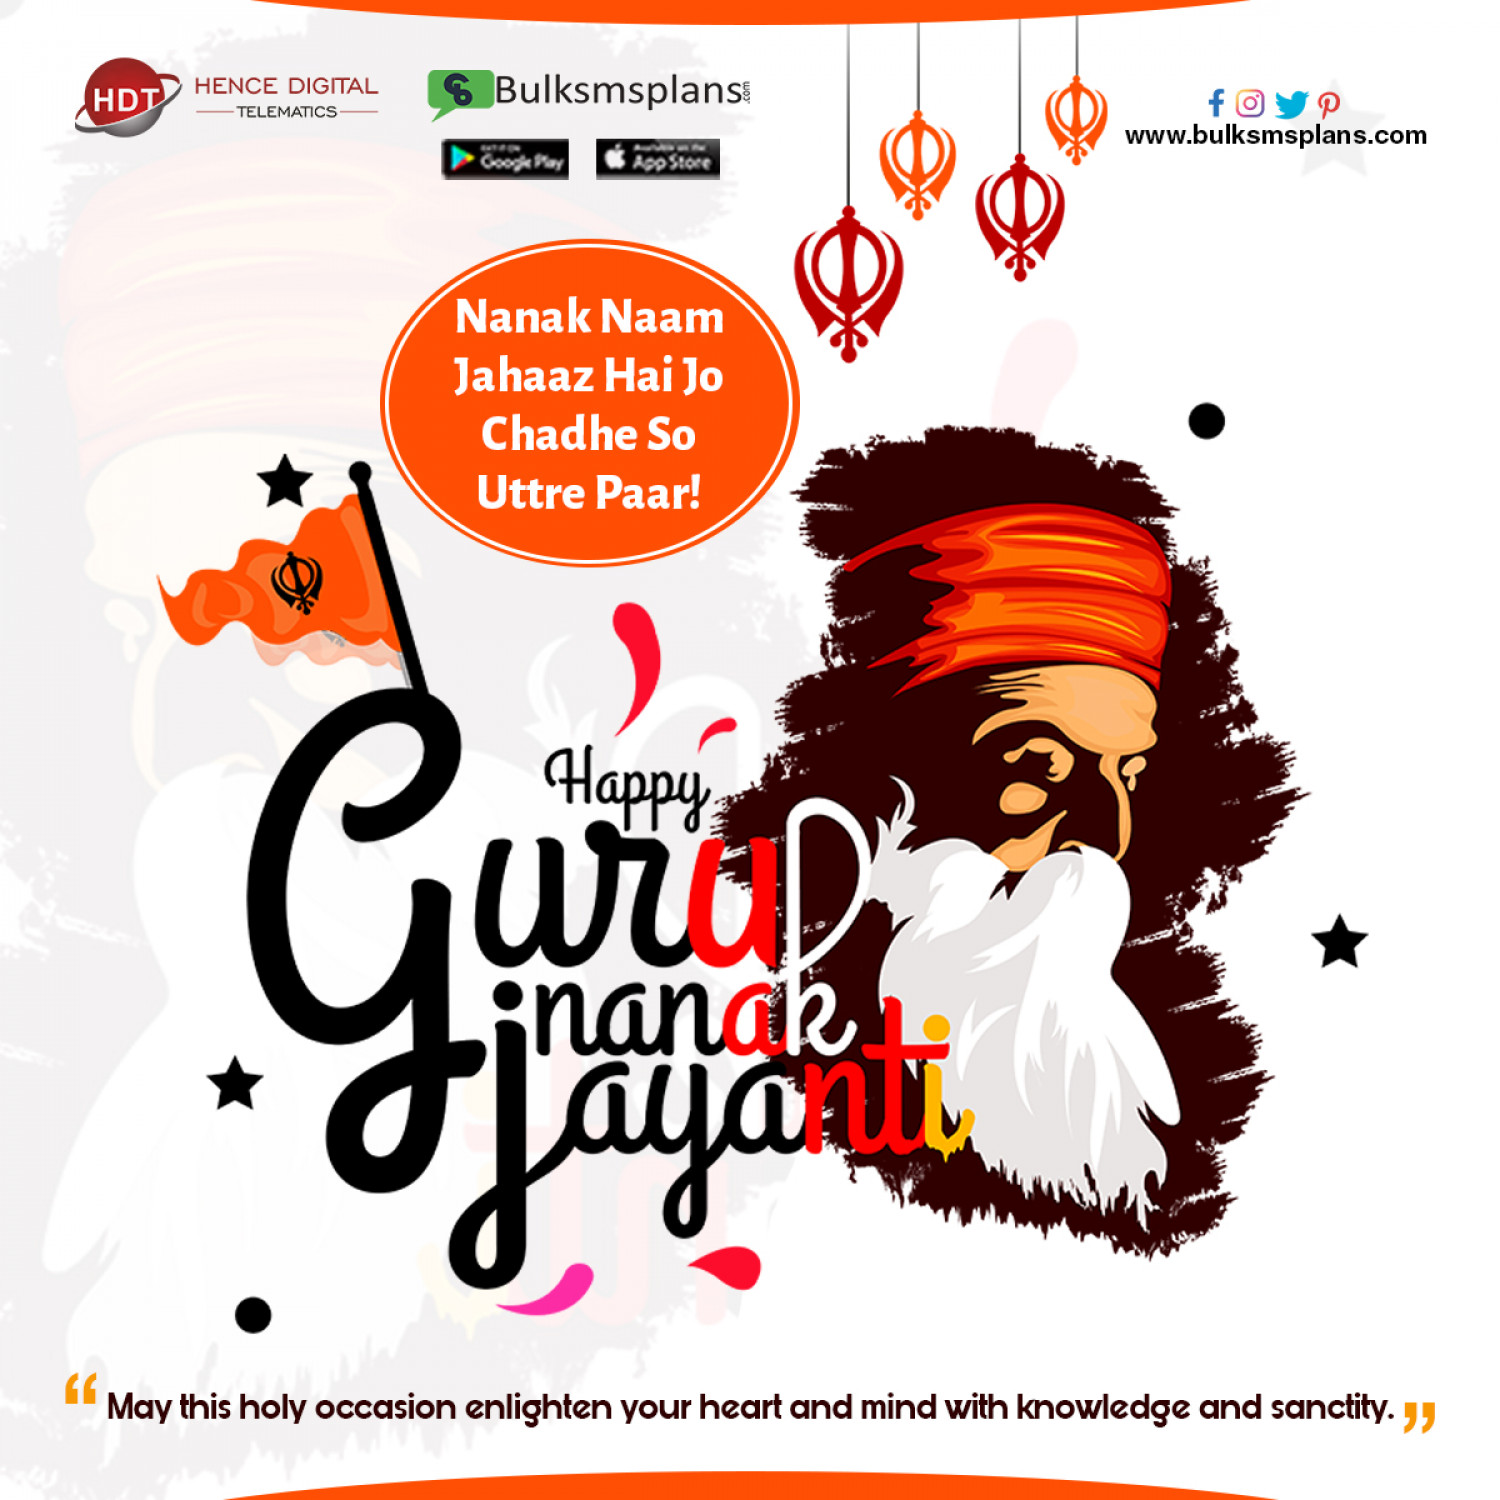 Nanak Naam Jahaaz Hai Jo Chadhe So Uttre Paar! Happy Guru Nanak Jayanti! Infographic